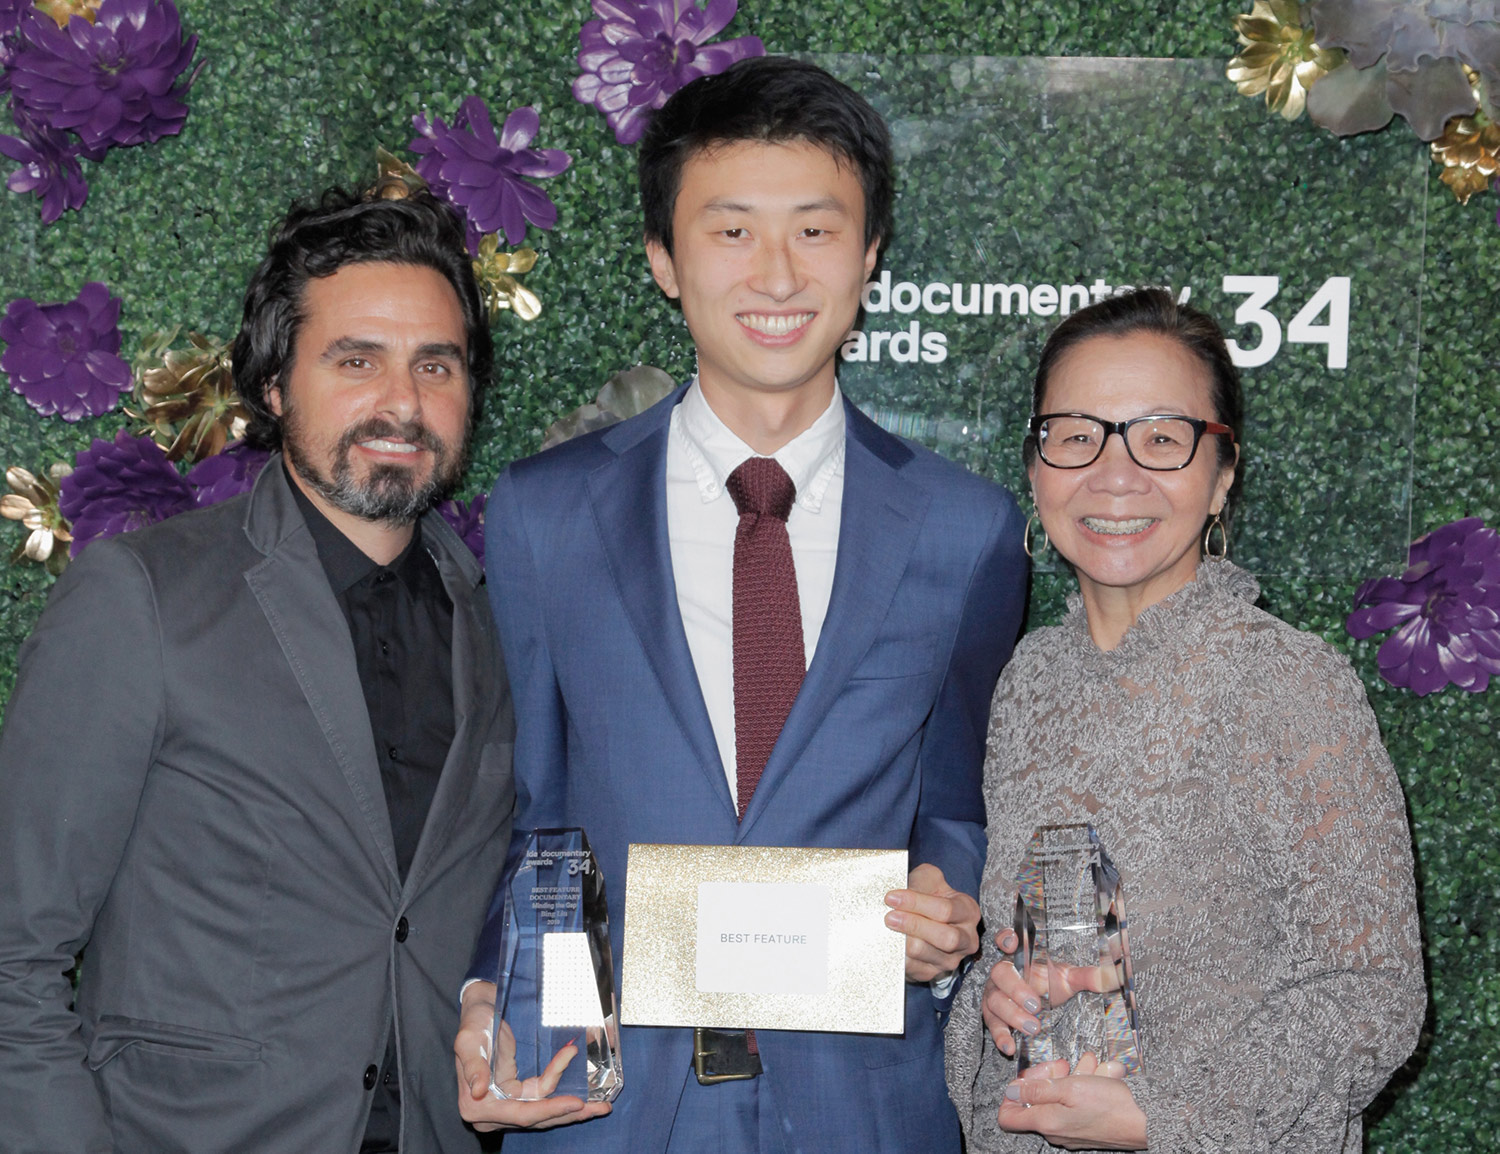 Filmmaker Bing Liu, who won both Emerging Filmmaker and Best Feature Award at the 2018 Documentary Awards